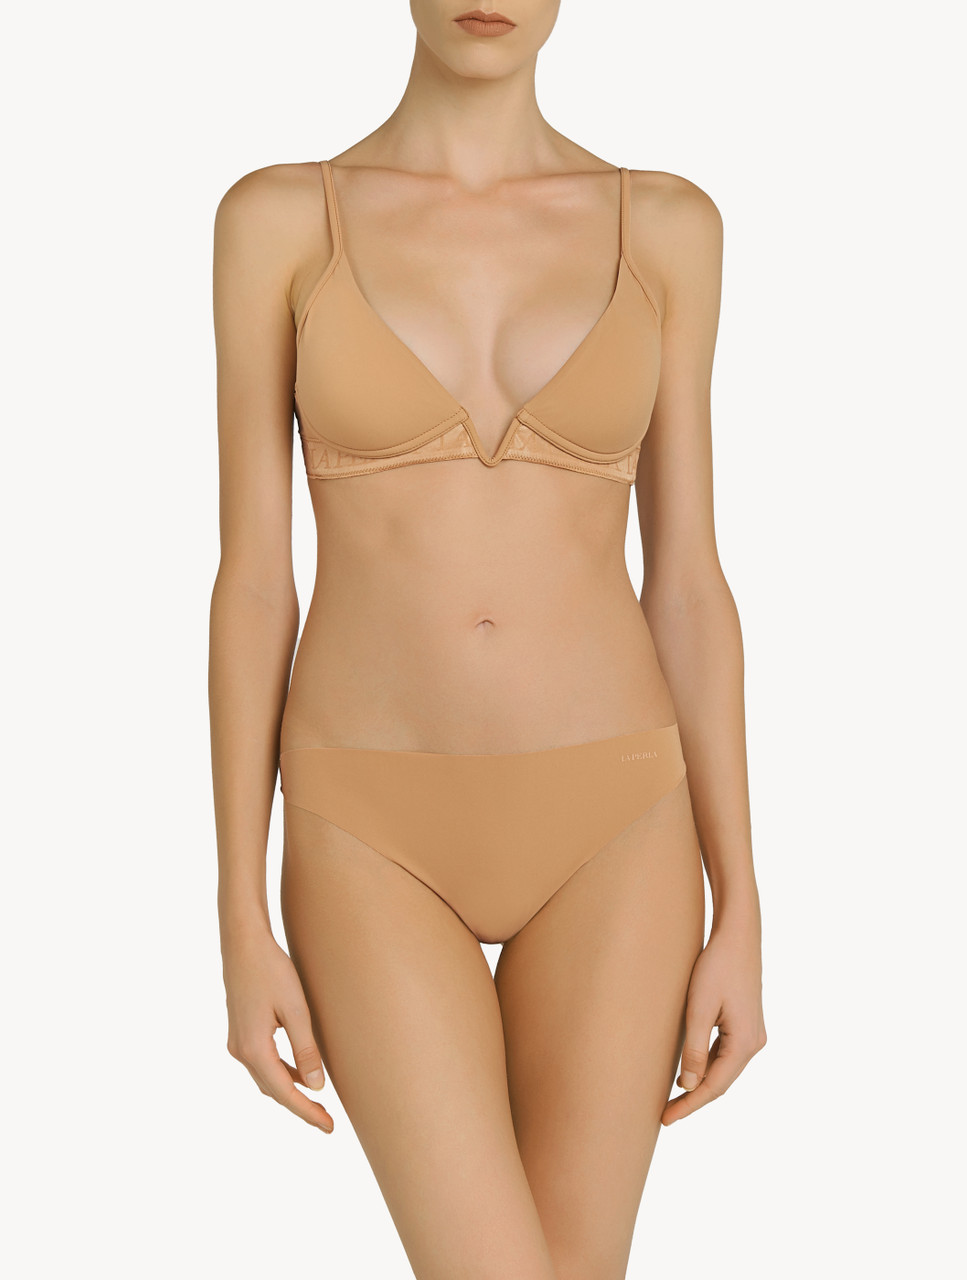 Unishopz.com on X: #newarrival Light Padded Wired Dark Nude T-shirt Bra  Brand: Secret Possession By PRIMARK #bra #cottonbra   / X